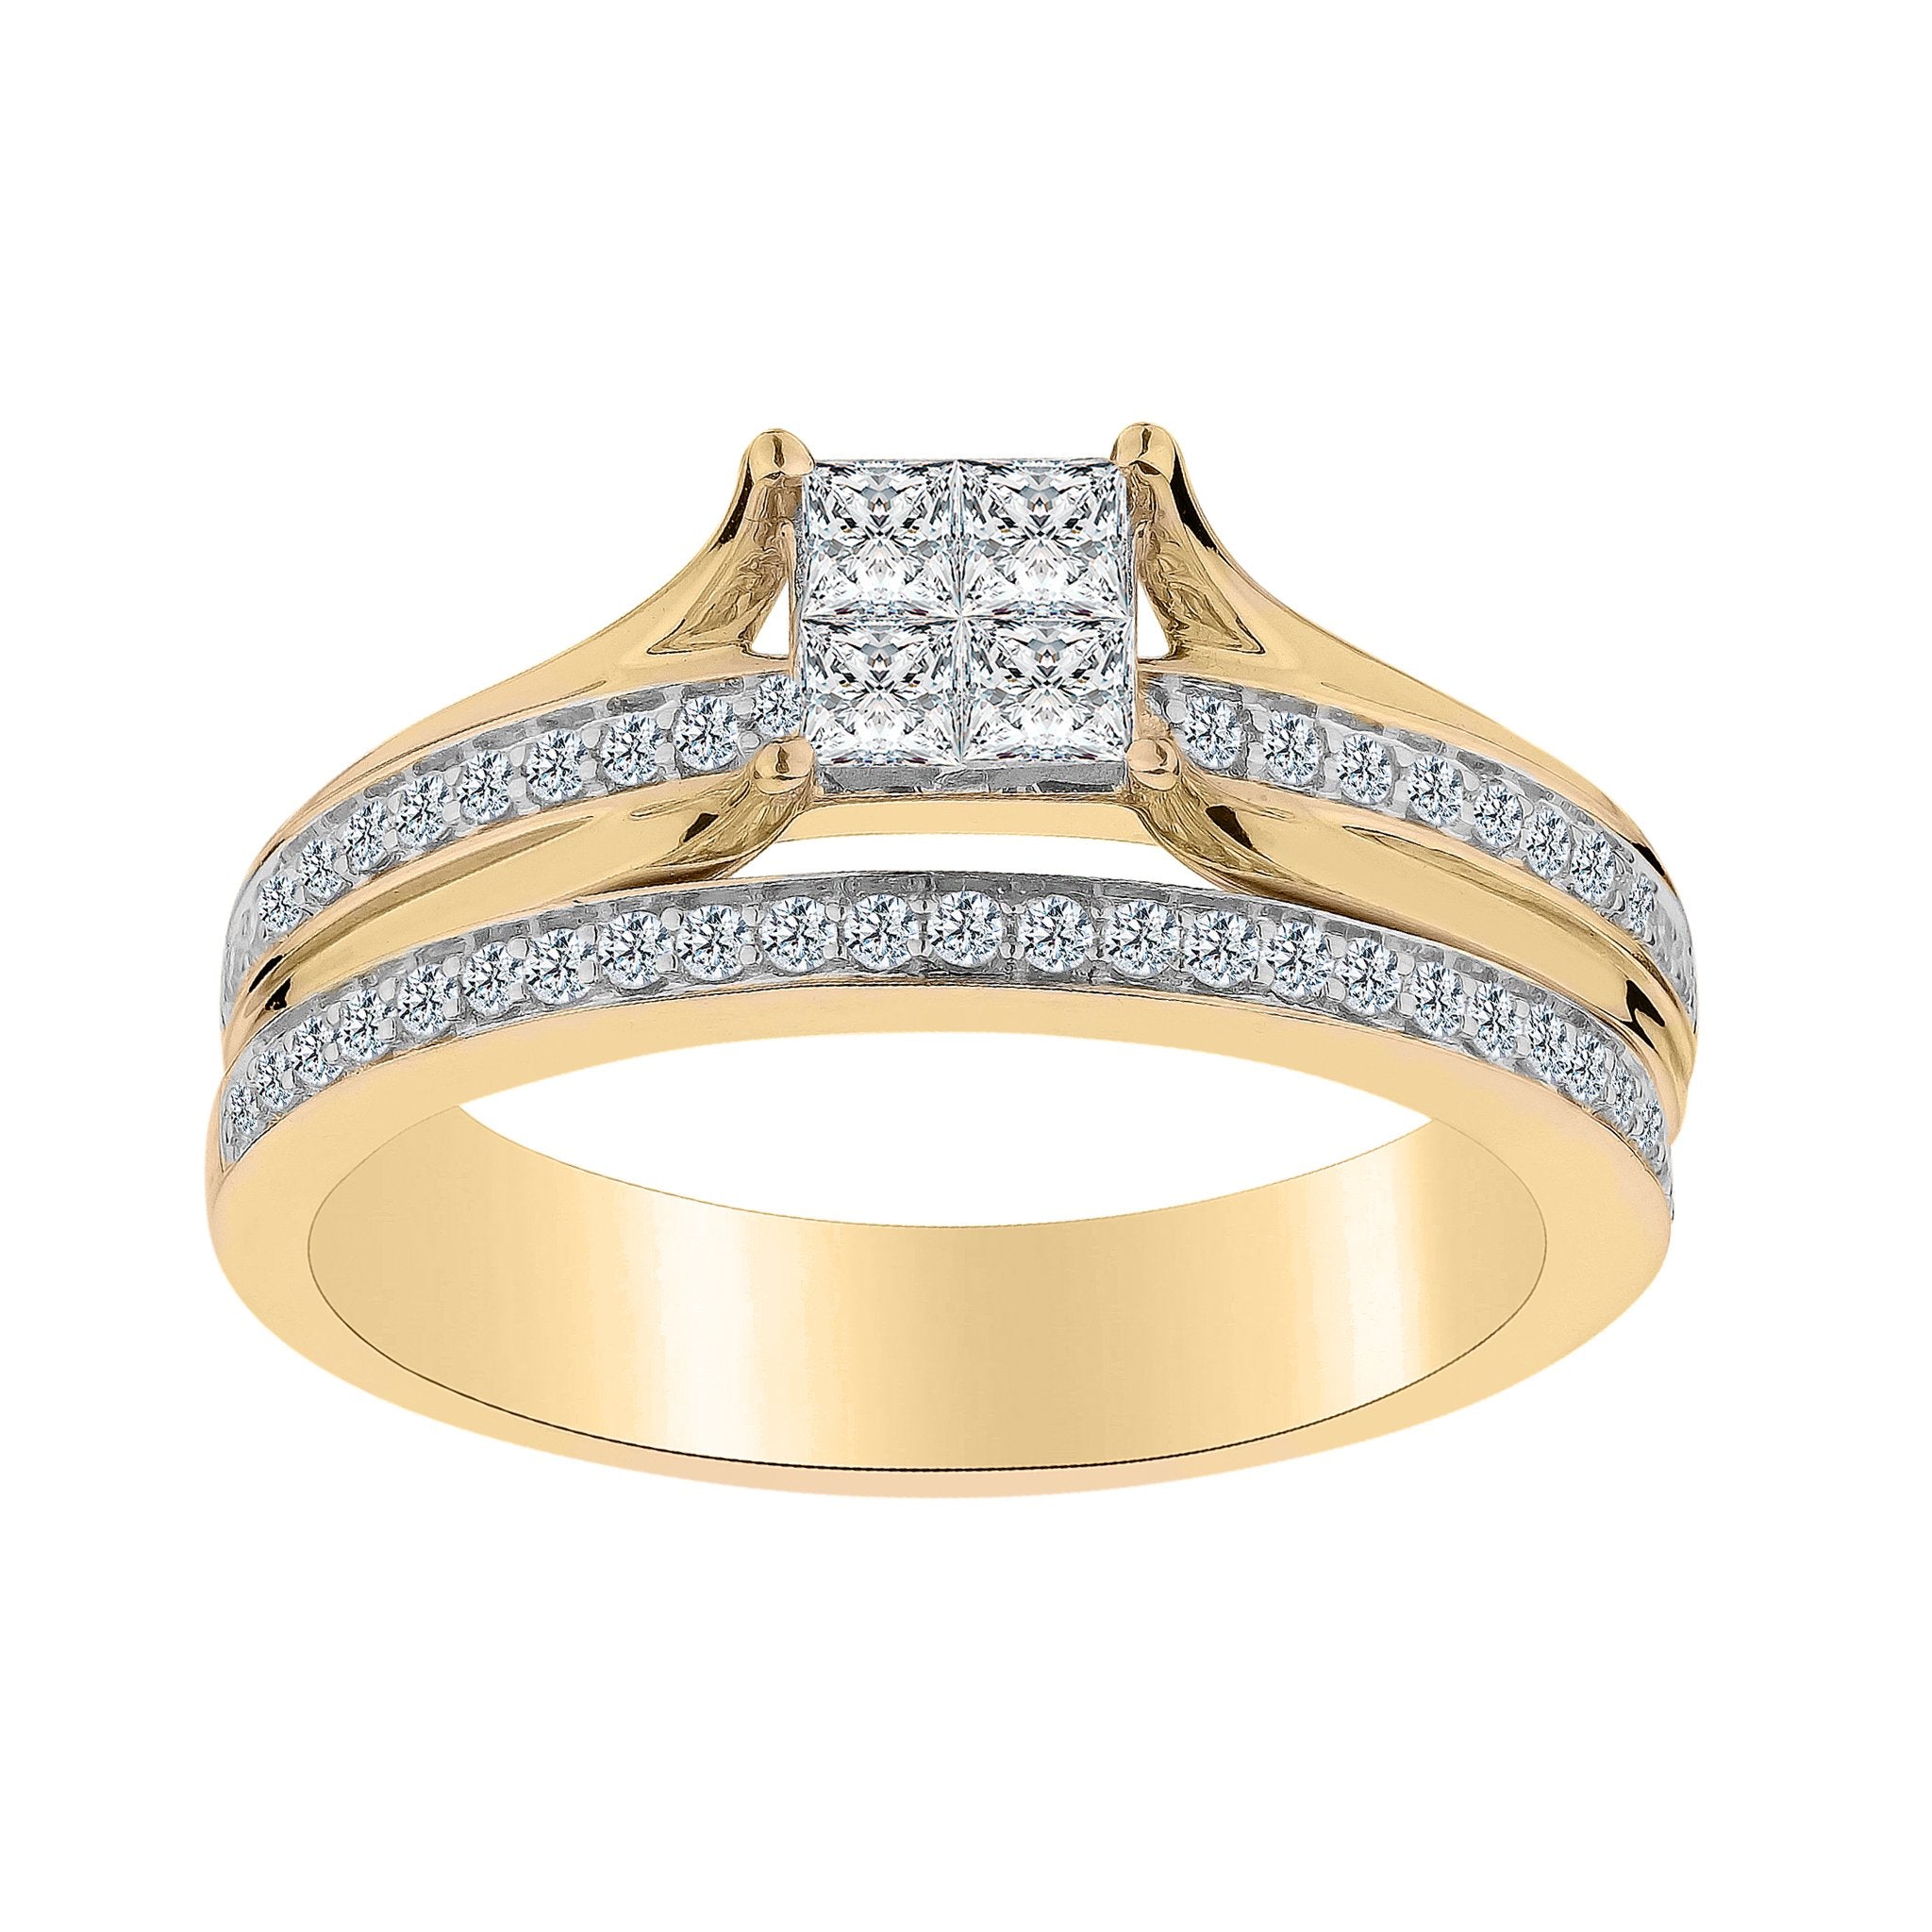 .50 CARAT DIAMOND RING SET, 10kt YELLOW GOLD - Griffin Jewellery Designs